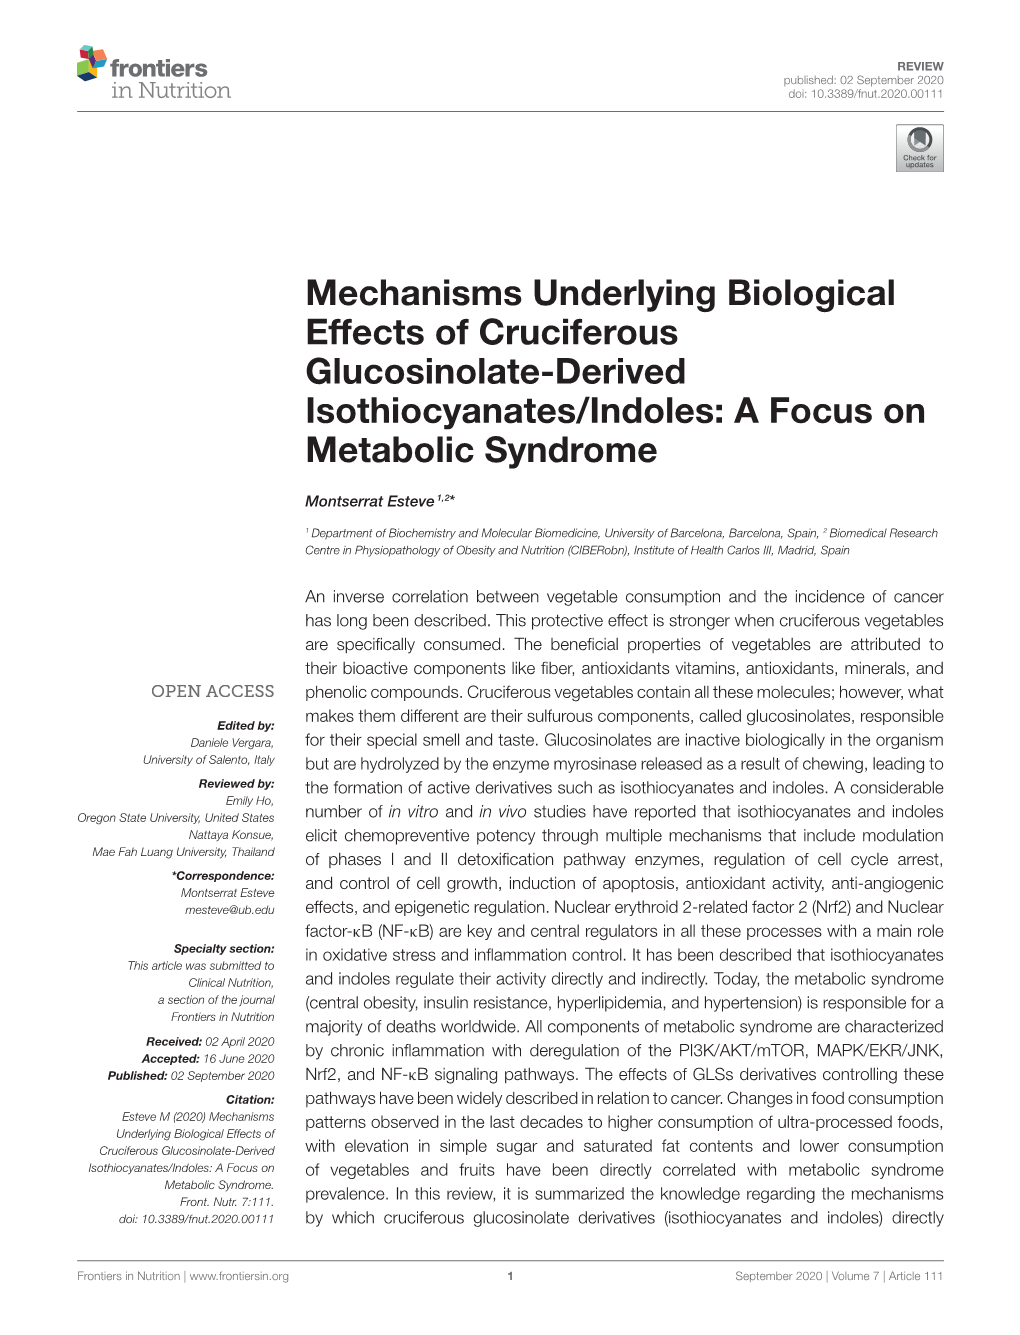 Mechanisms Underlying Biological Effects of Cruciferous Glucosinolate-Derived Isothiocyanates/Indoles: a Focus on Metabolic Syndrome